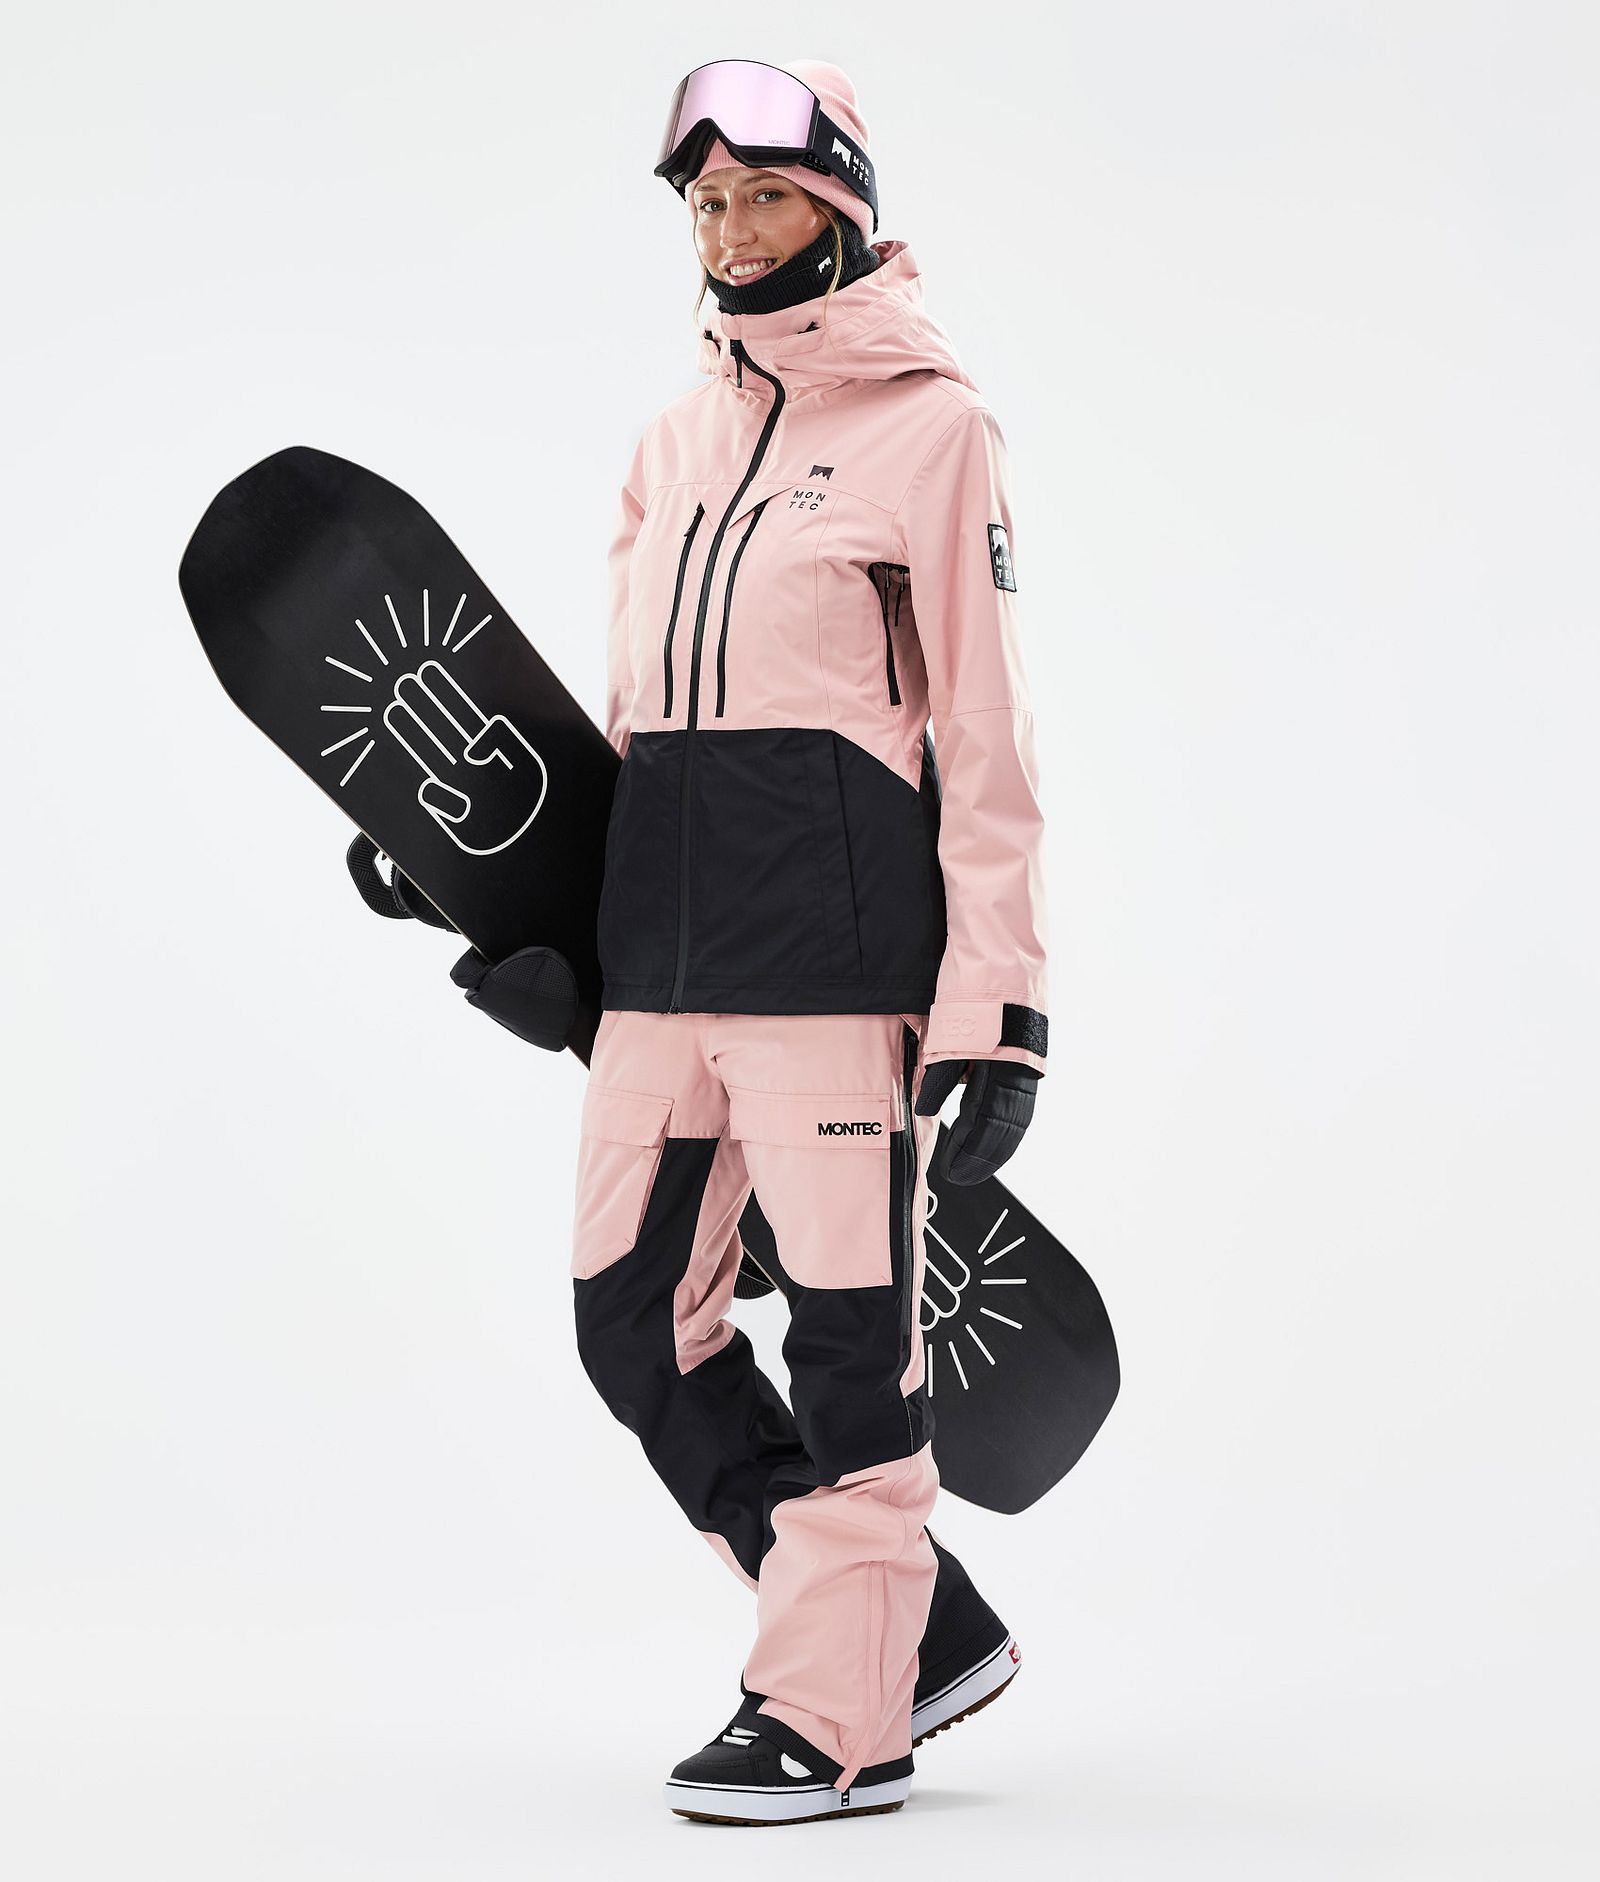 Moss W Giacca Snowboard Donna Soft Pink/Black